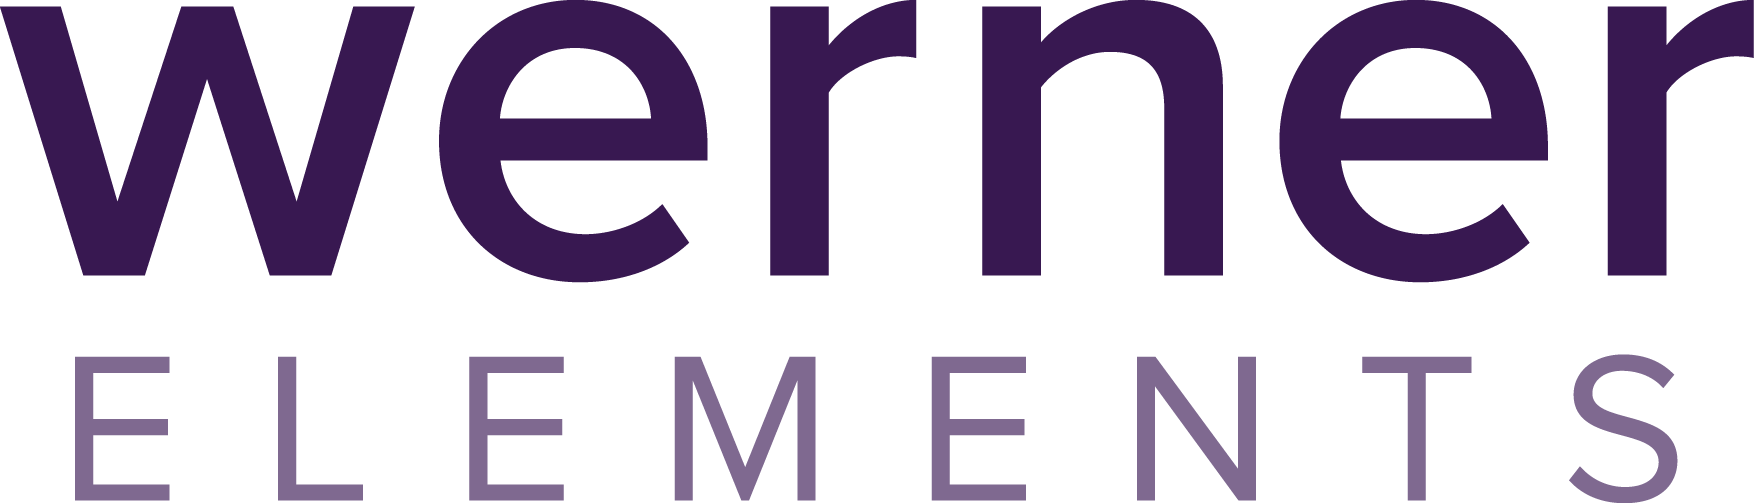 We Are Werner Logo - Home Page – Werner Elements